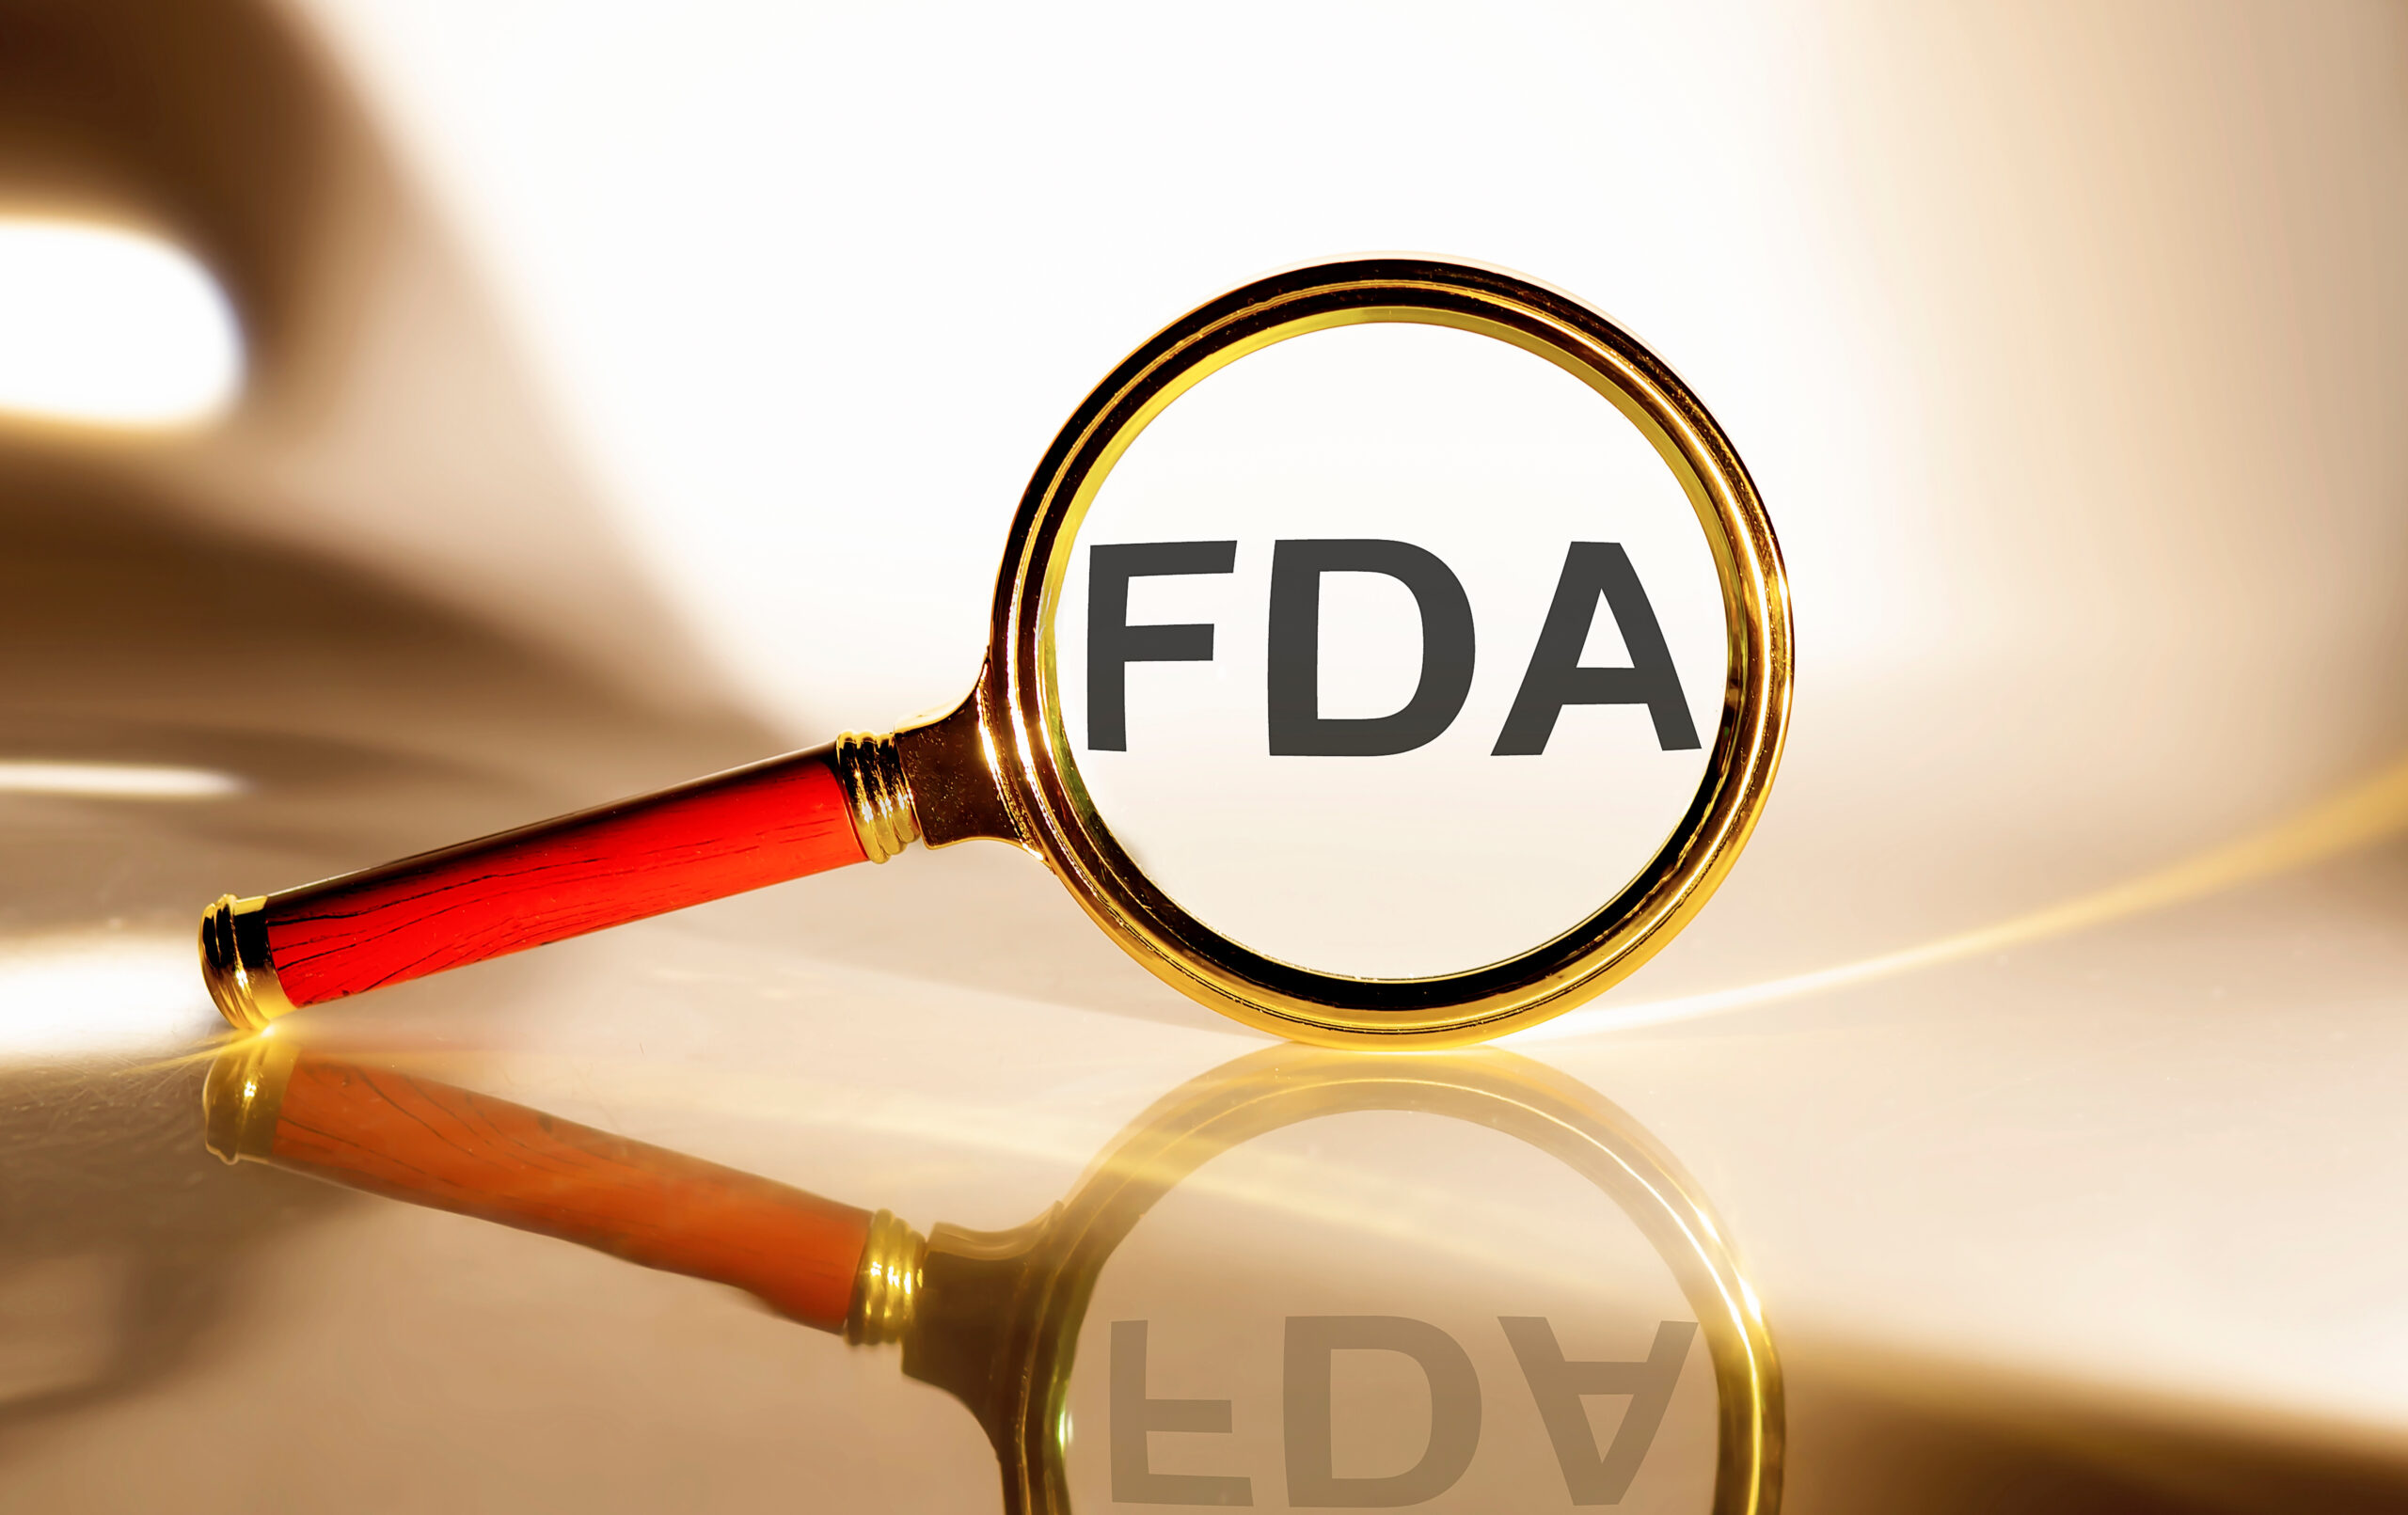 FDA, on the FDA's radar